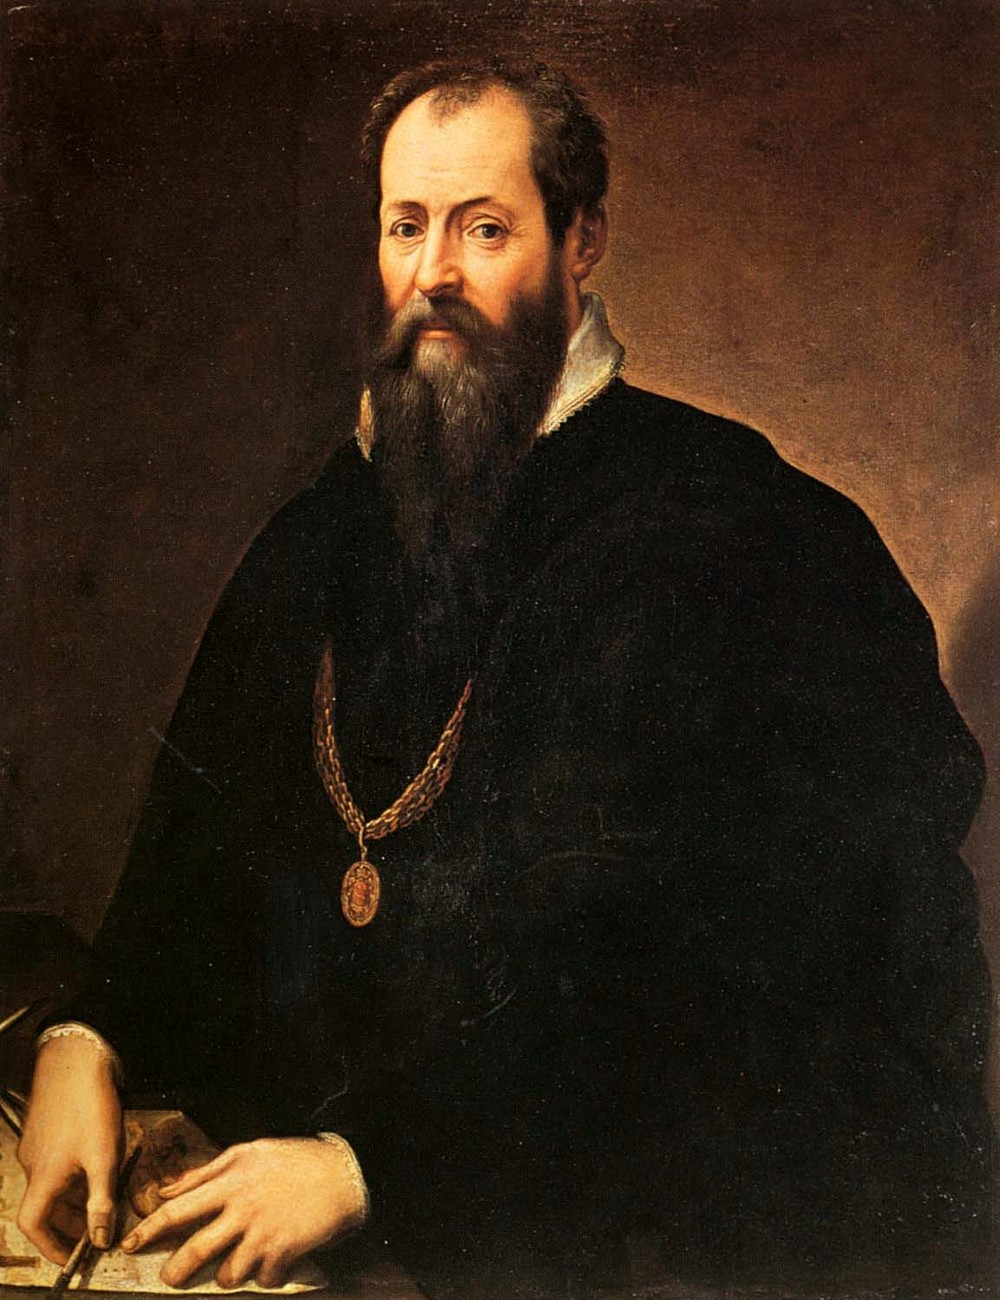 Автопортрет. Галерея Уффици, Флоренция. Между&nbsp;1550 и&nbsp;1567.